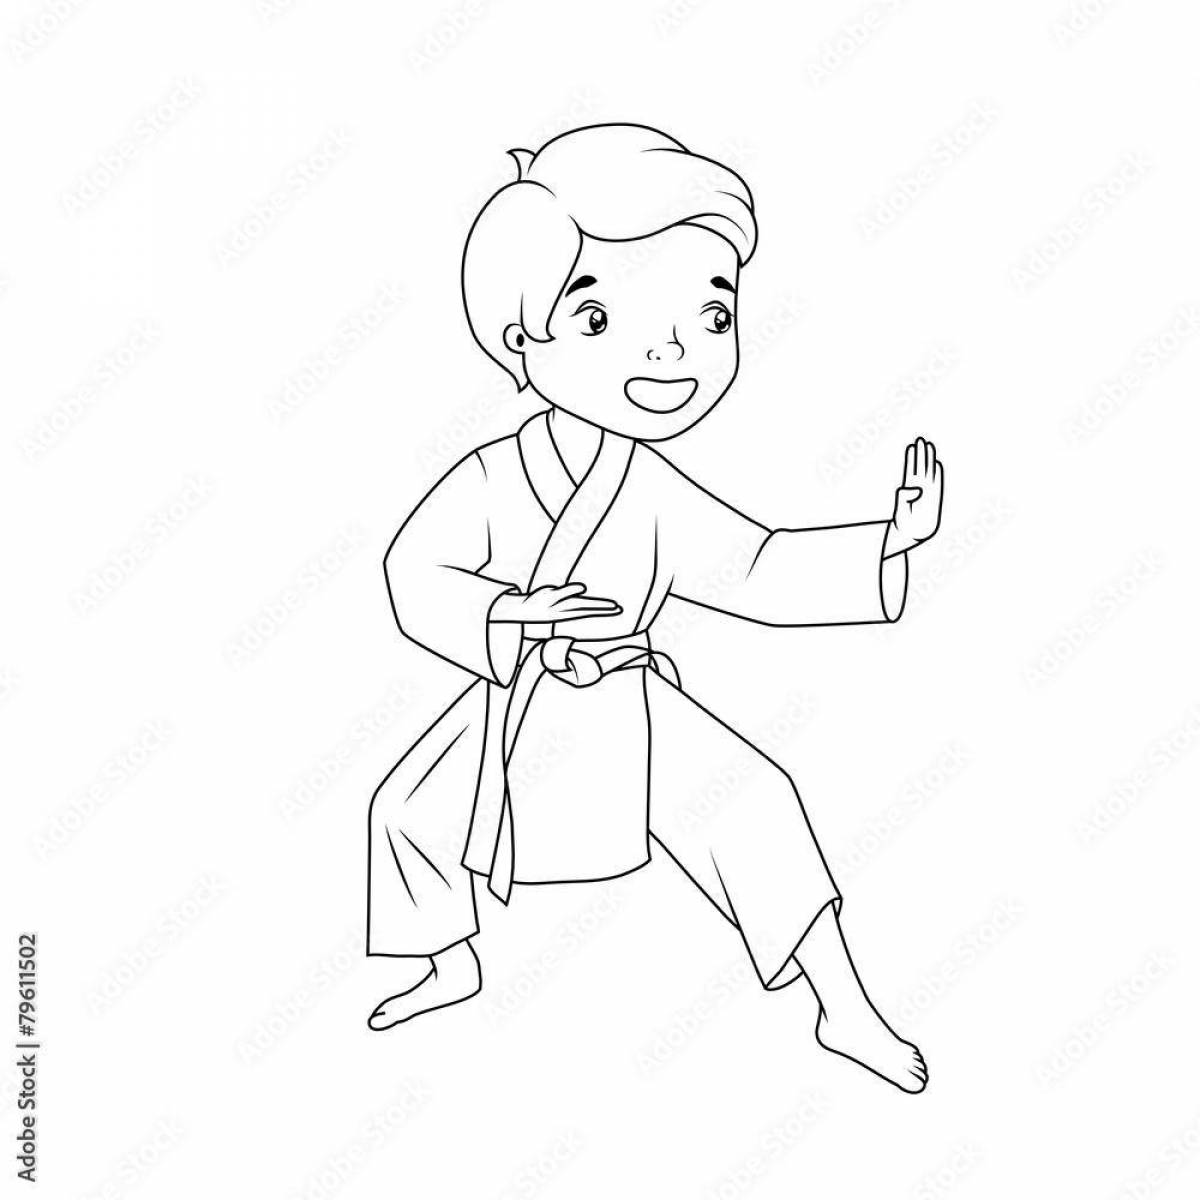 Aikido humorous coloring book